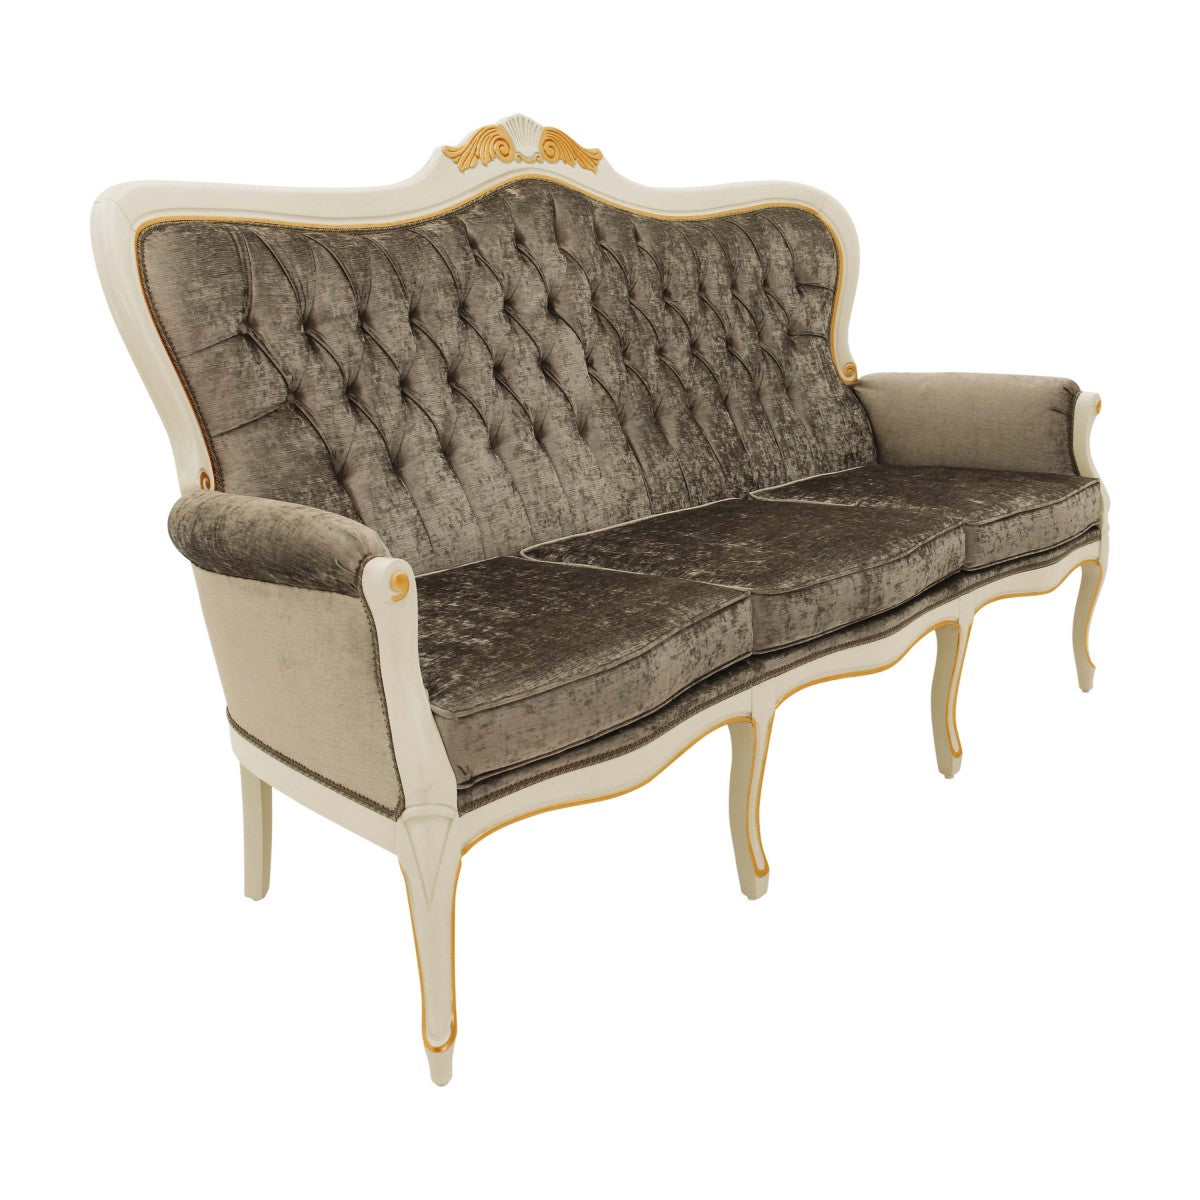 Foglia Bespoke Upholstered Cushion Seat Louis Philippe Style Three Seater Sofa MS9218E Custom Made To Order